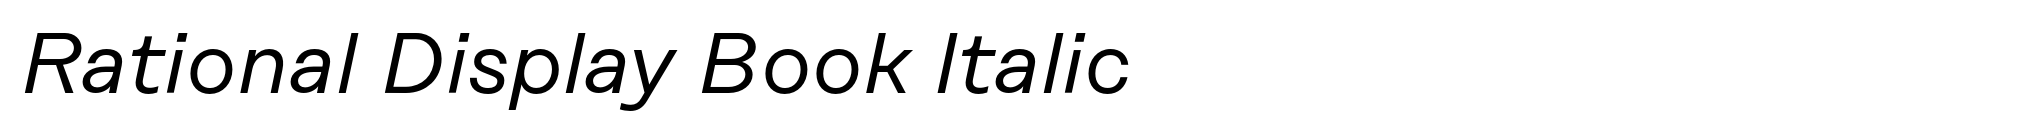 Rational Display Book Italic image